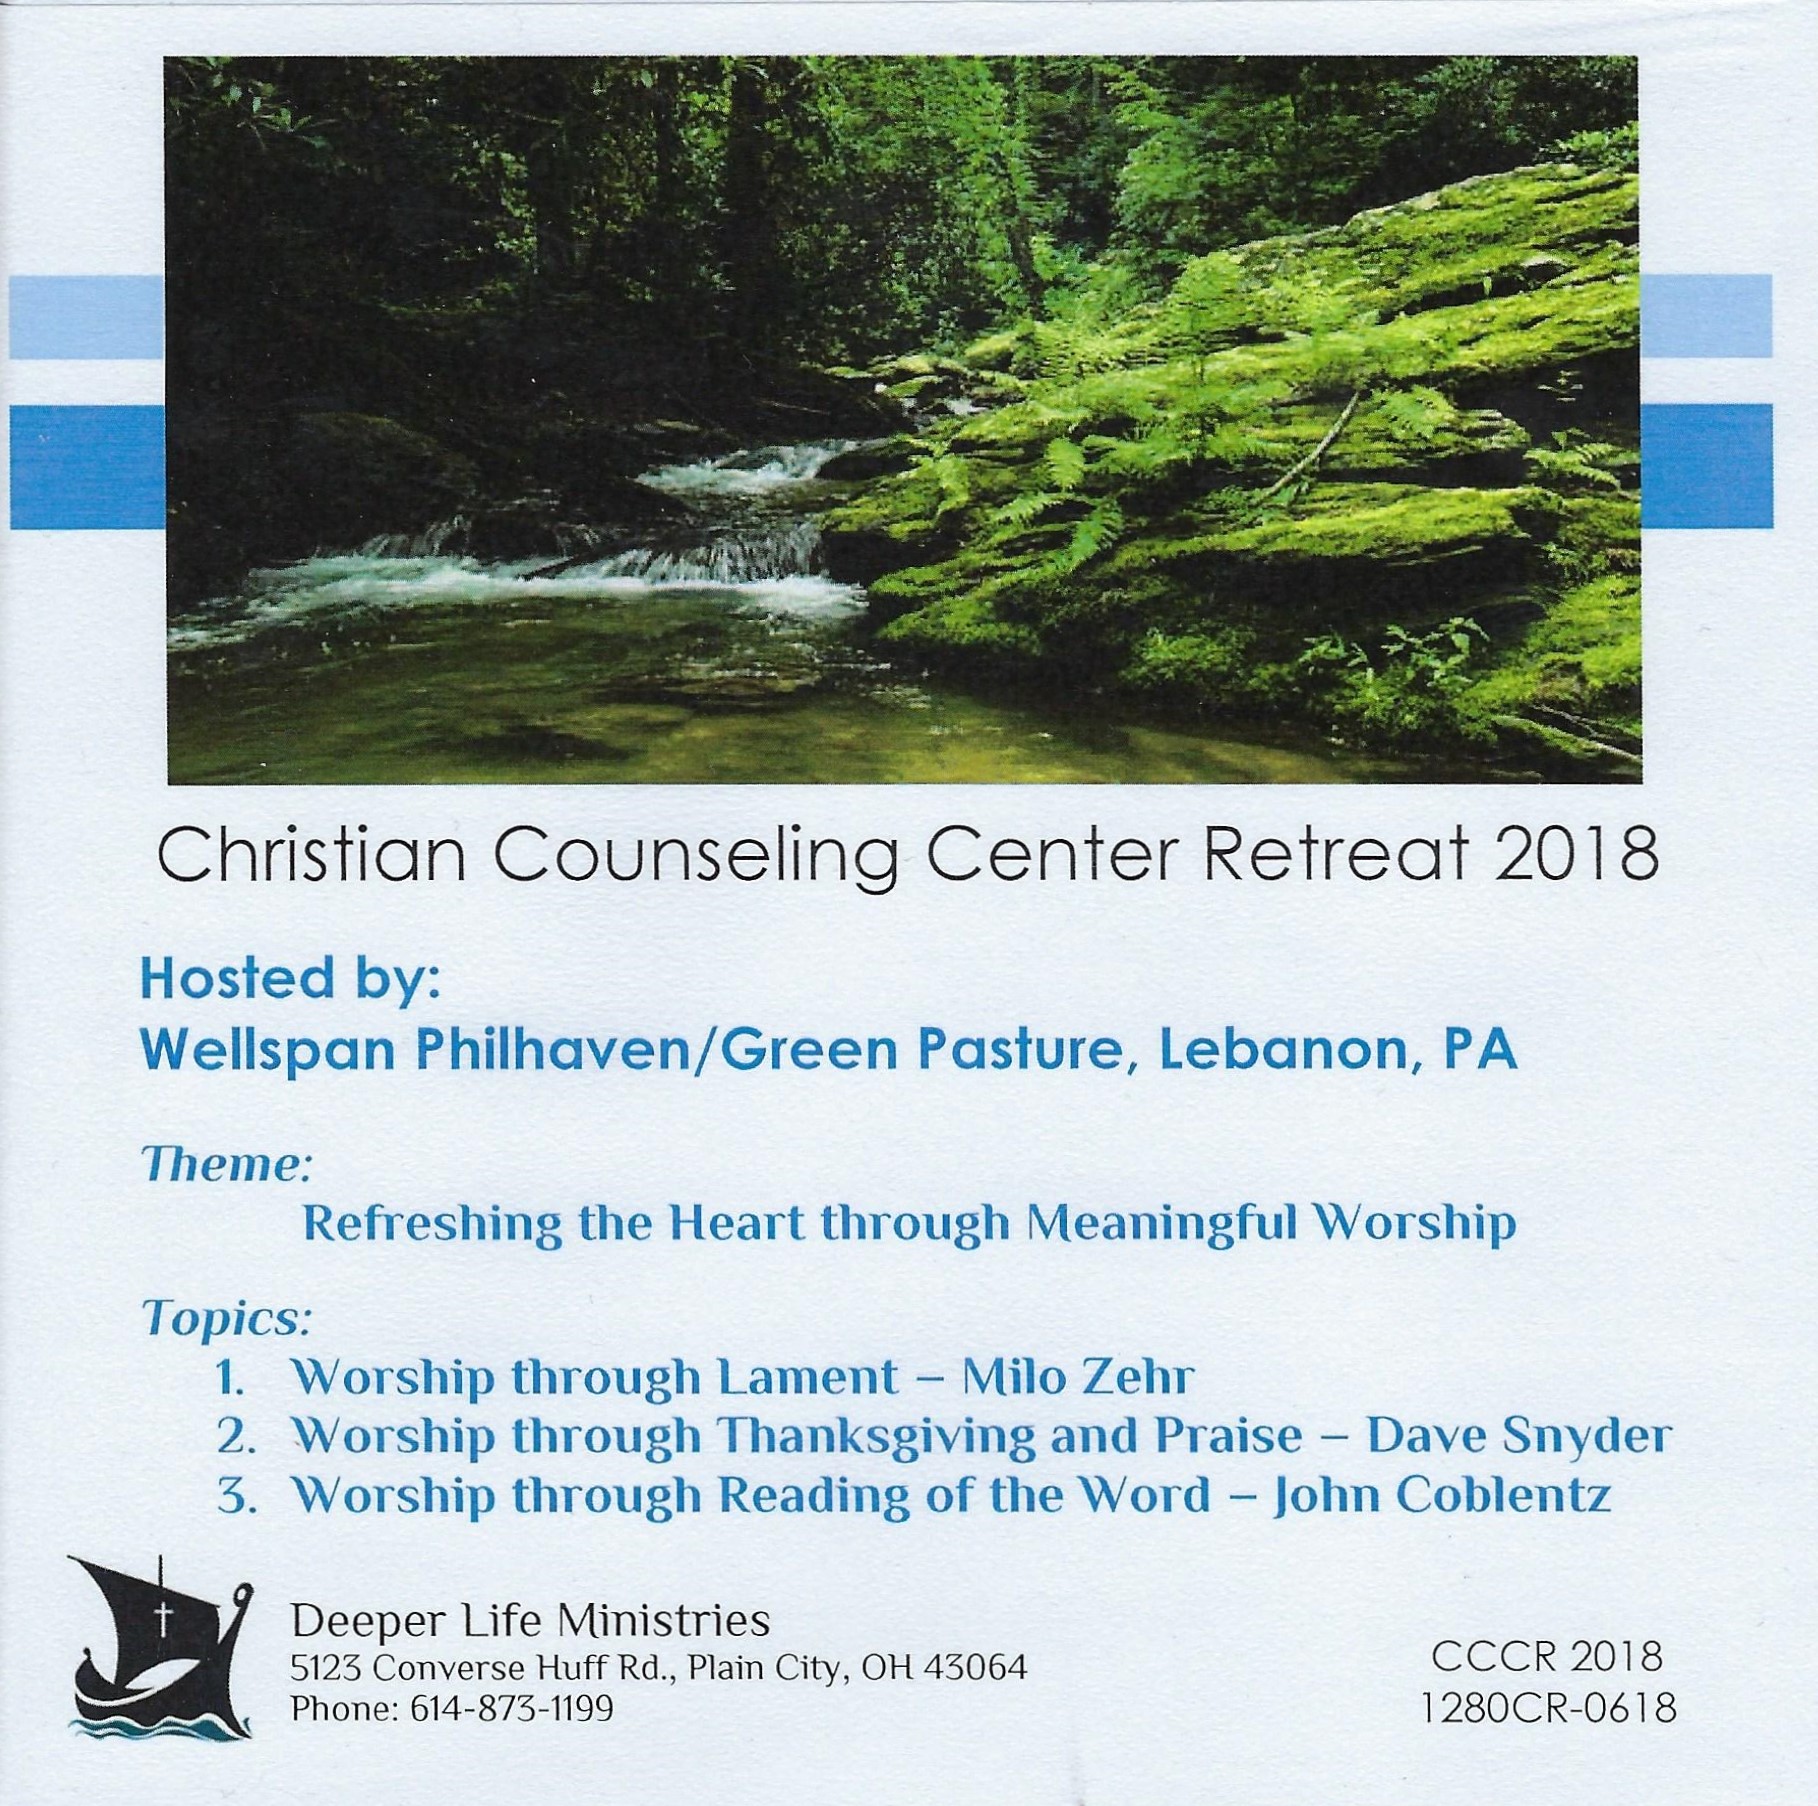 CHRISTIAN COUNSELING CENTER RETREAT 2018